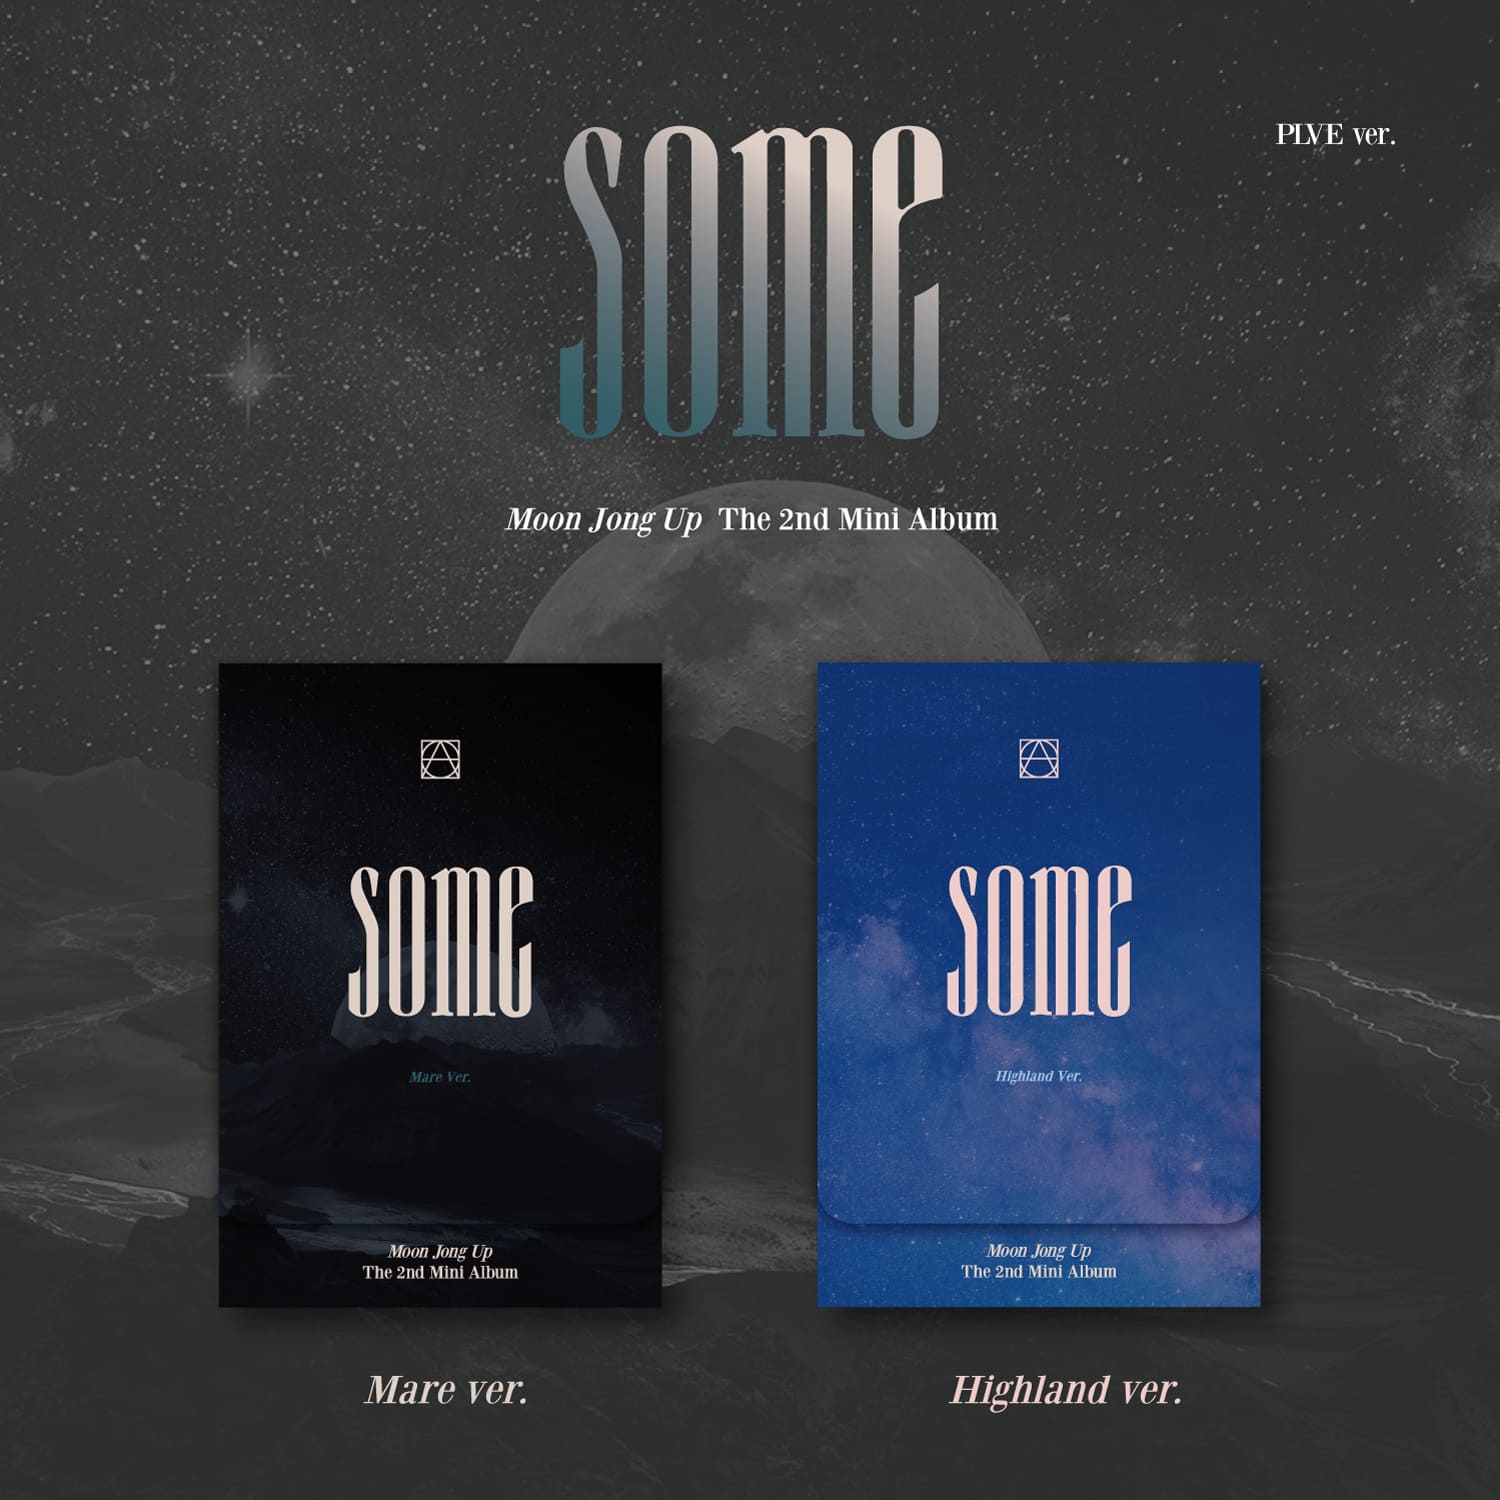 Moon Jong Up 2nd Mini Album SOME (PLVE Version)